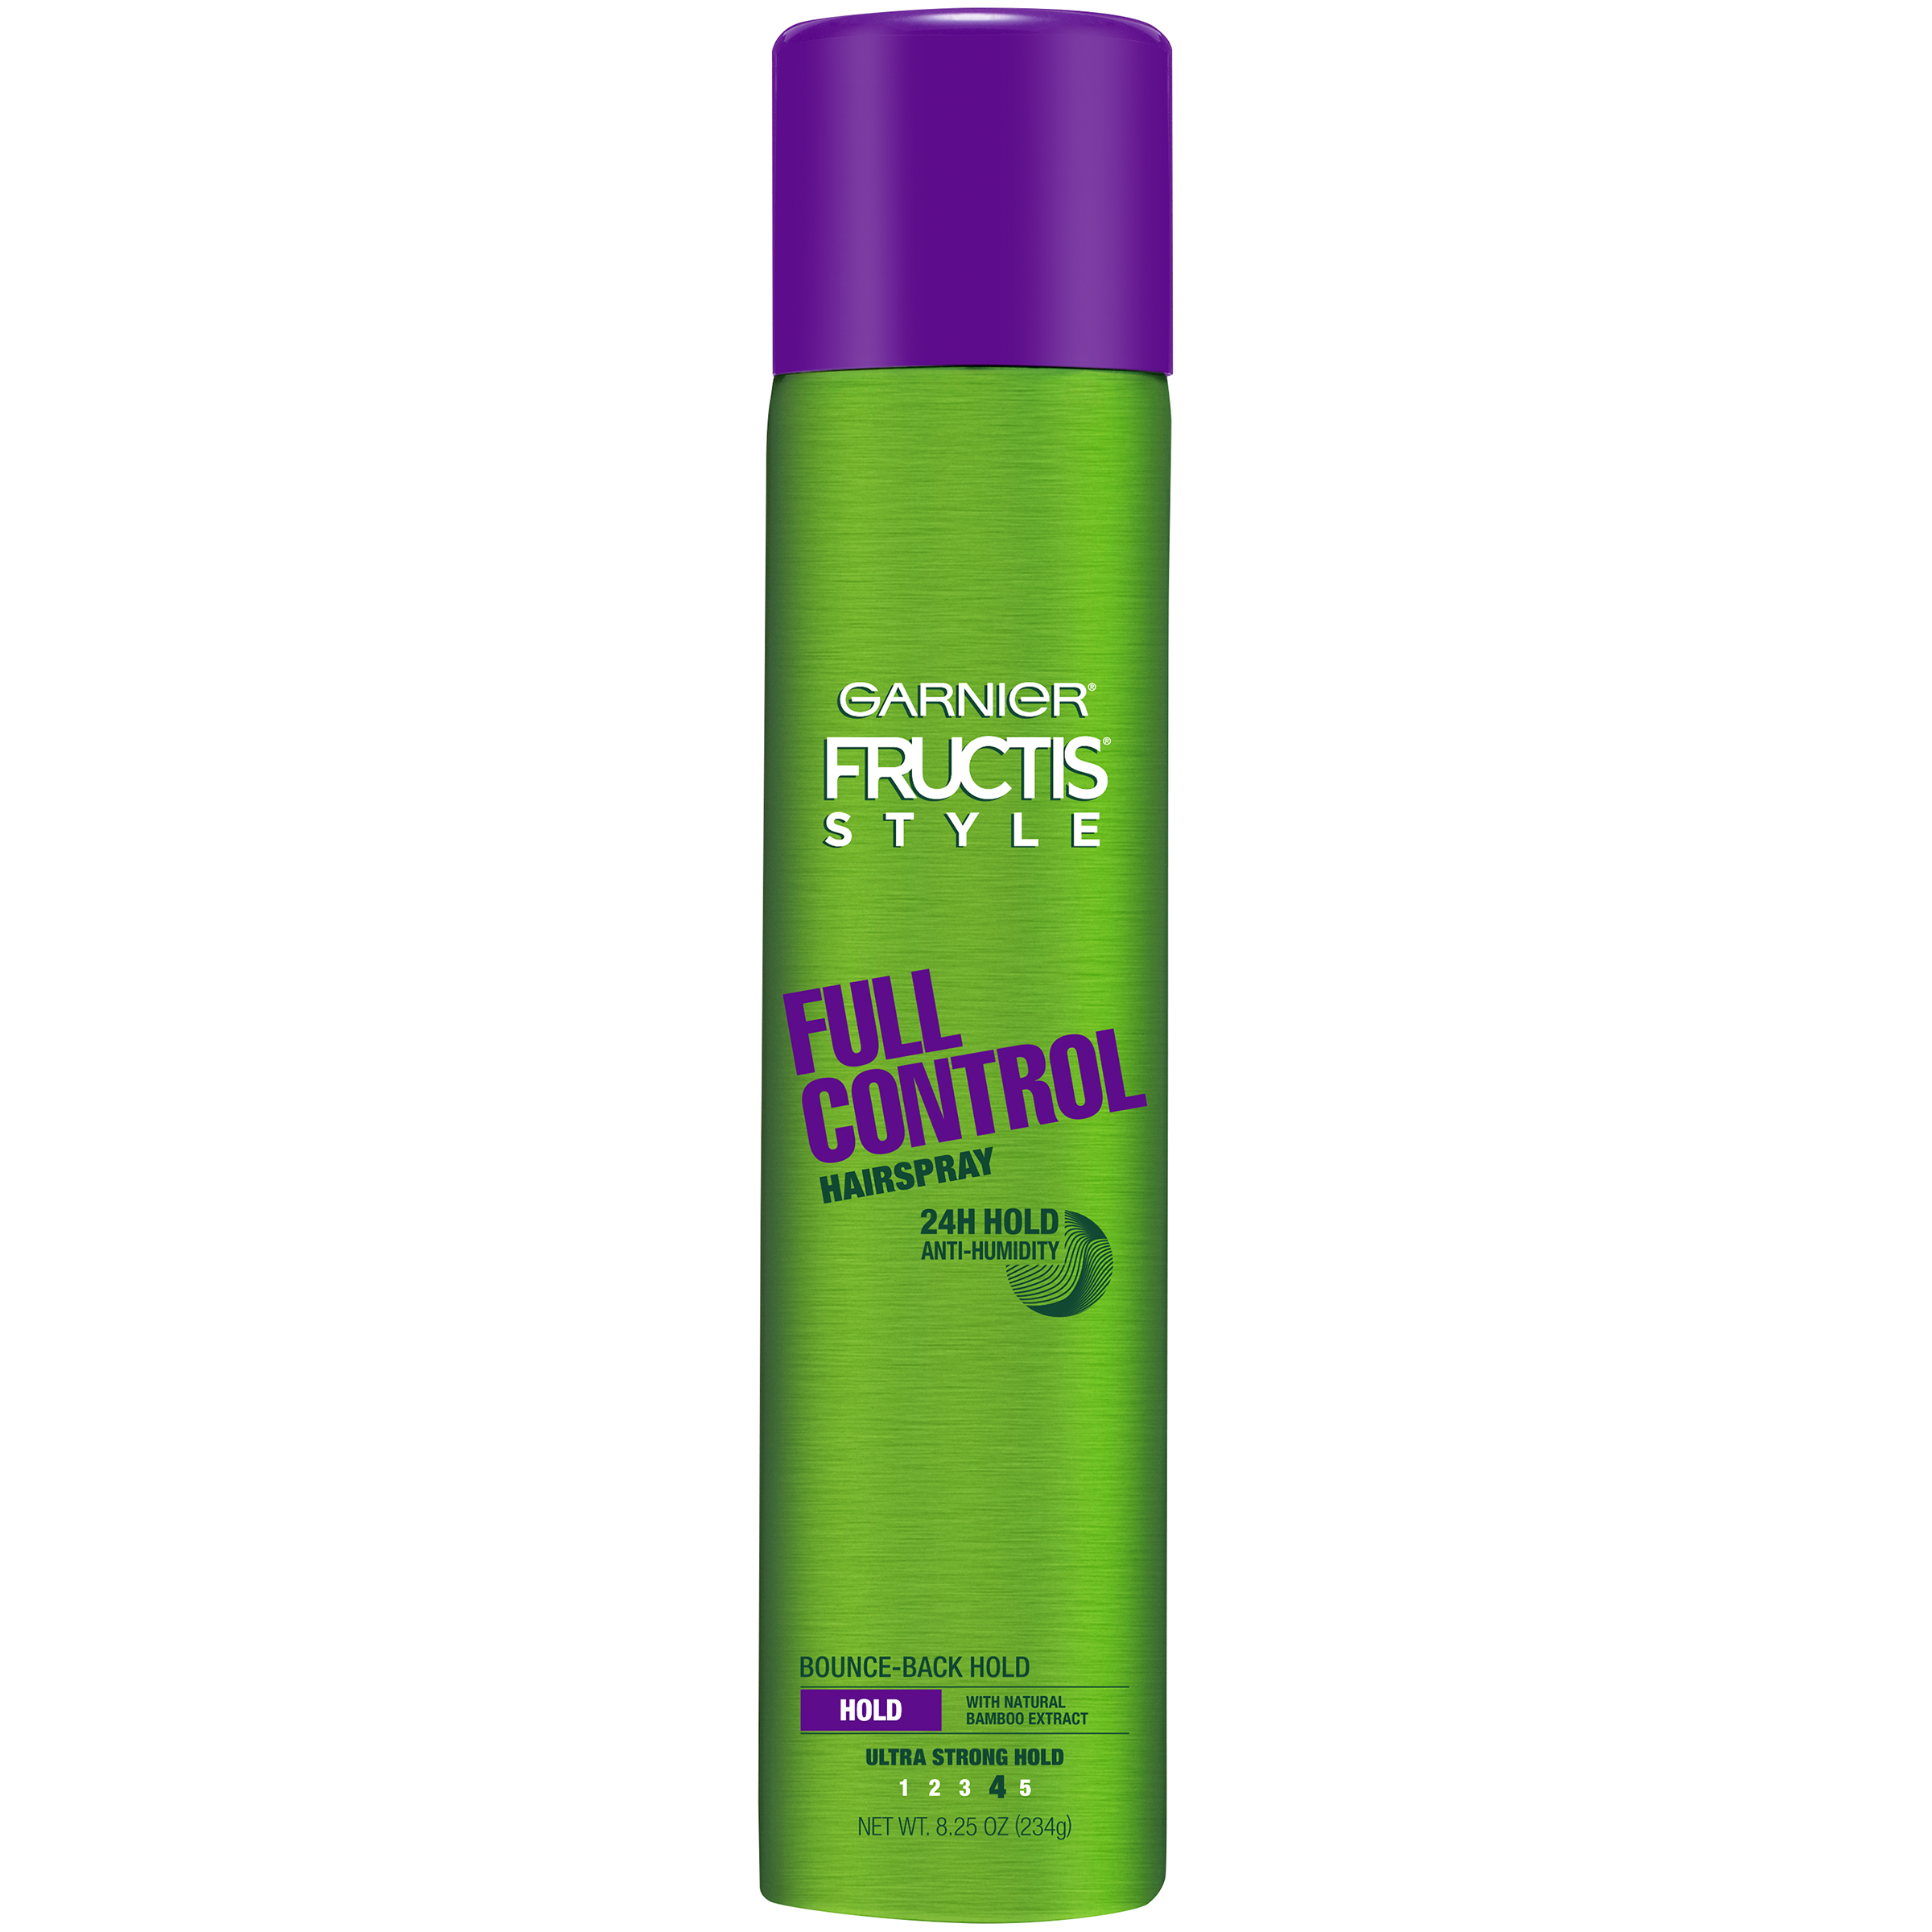 Garnier Fructis Style Hairspray, Anti-Humidity, Full Control, Ultra Strong 4, 8.25 oz (234 g)